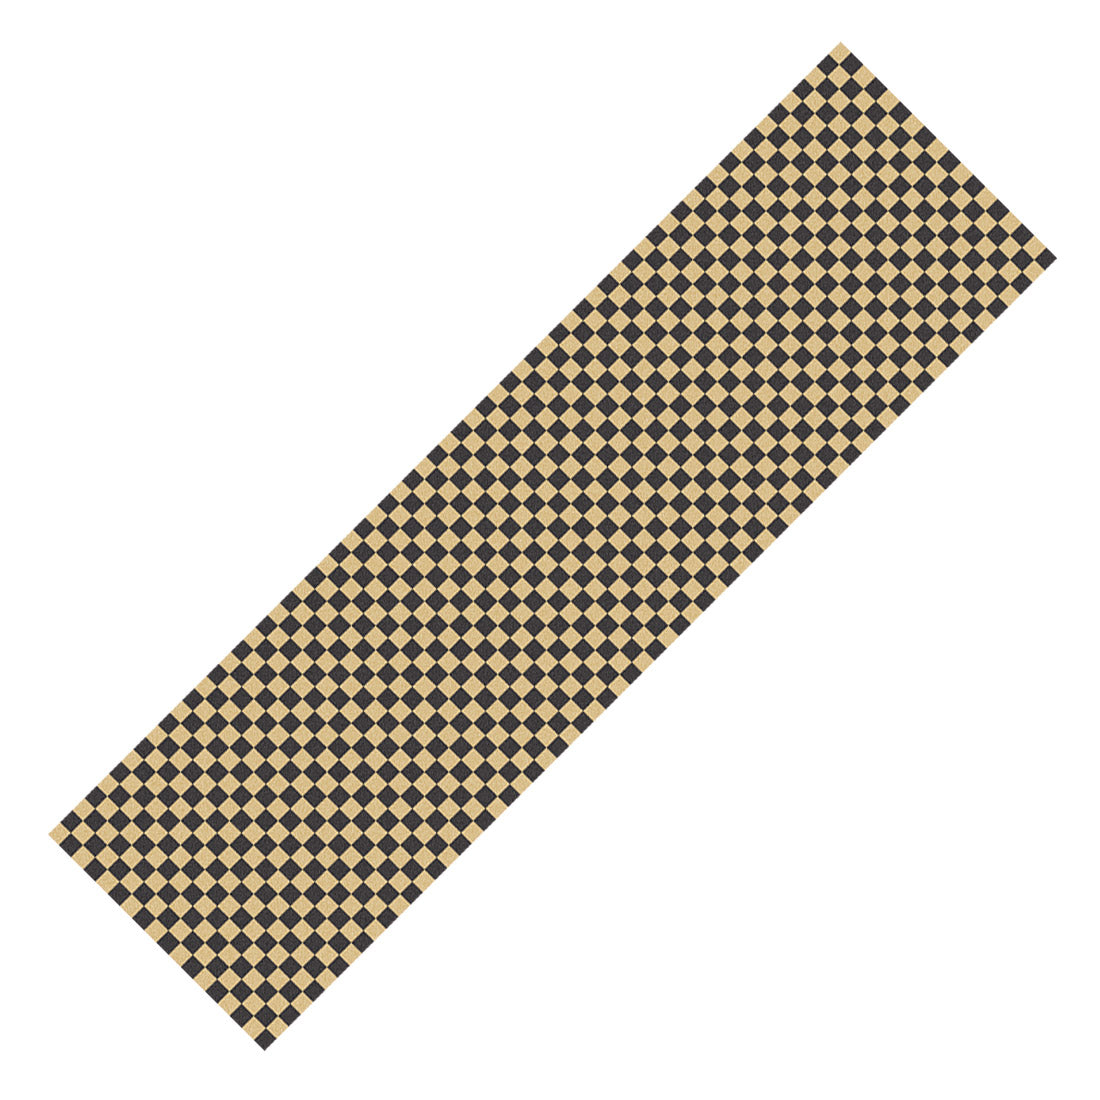 Fruity Griptape - Checkered Black Brown Check Griptape